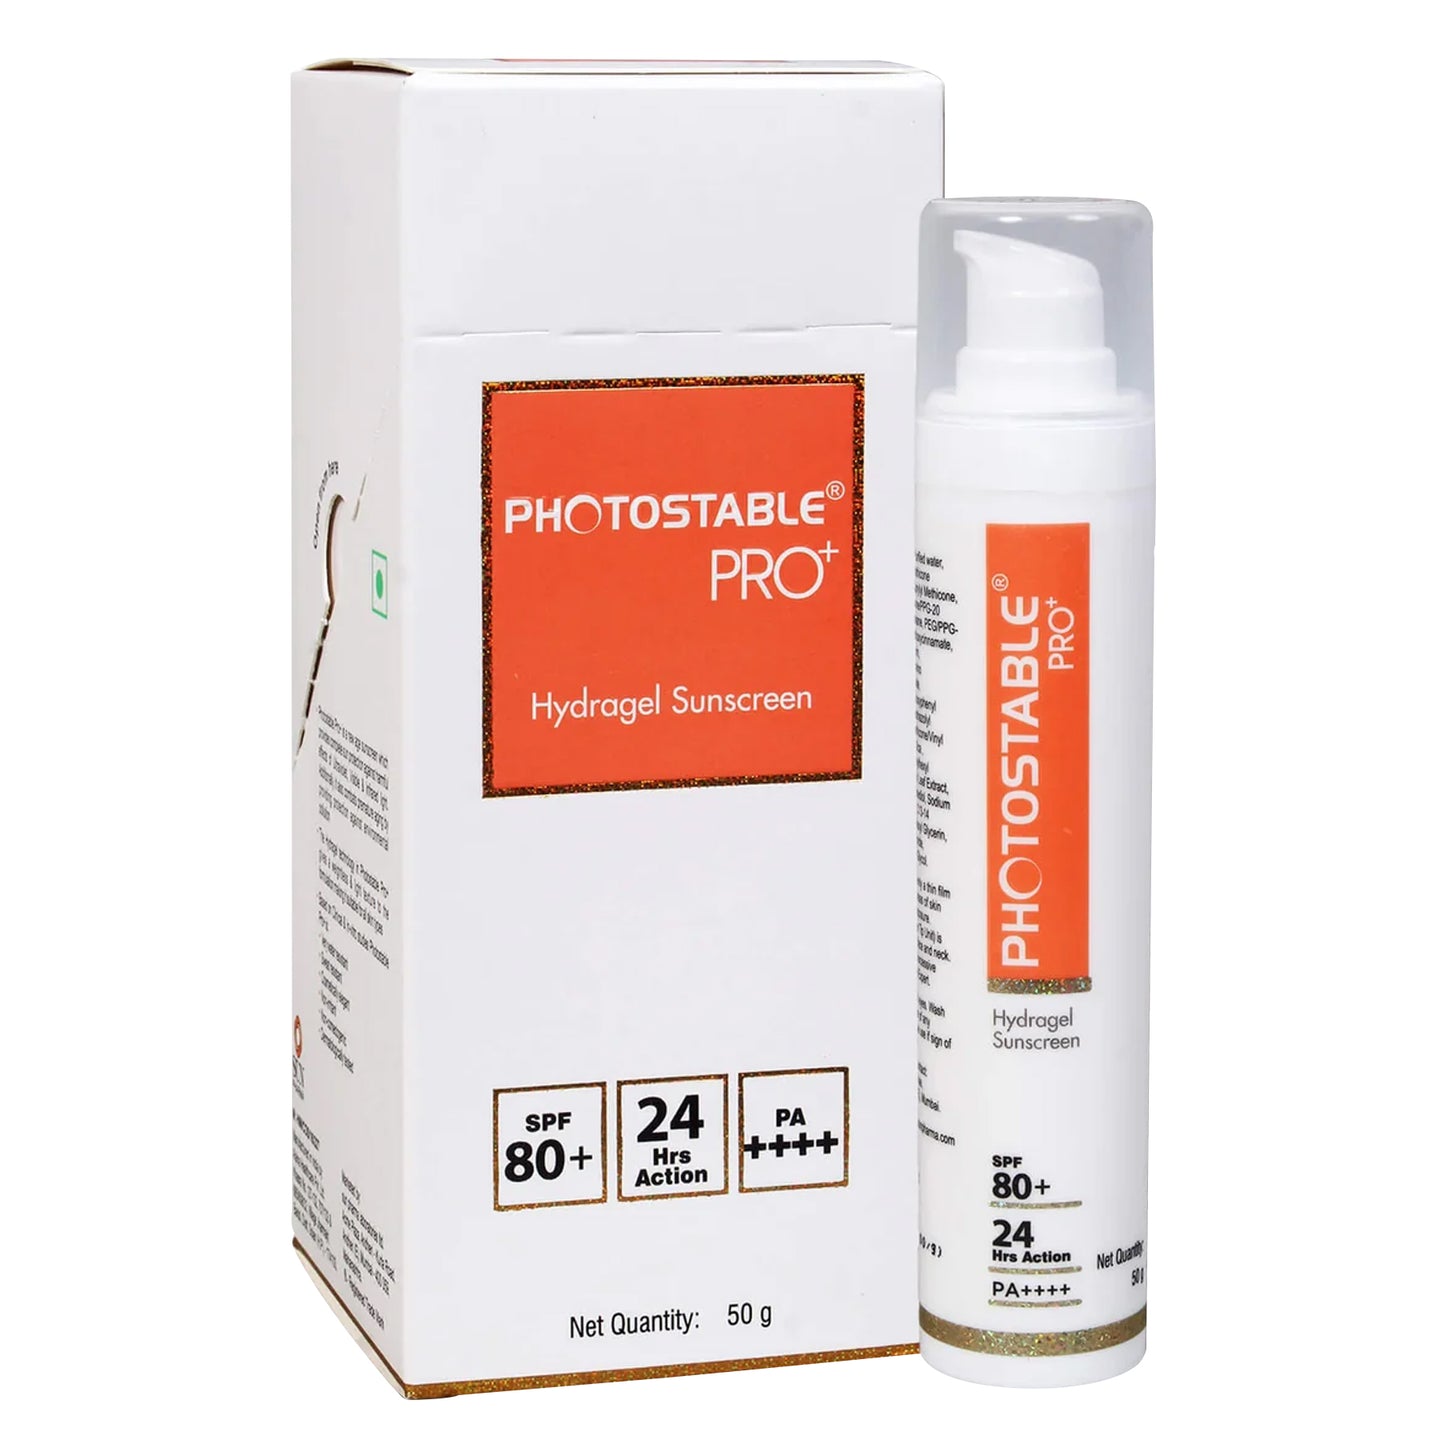 Photostable Pro+ Hydragel Sunscreen, 50gm